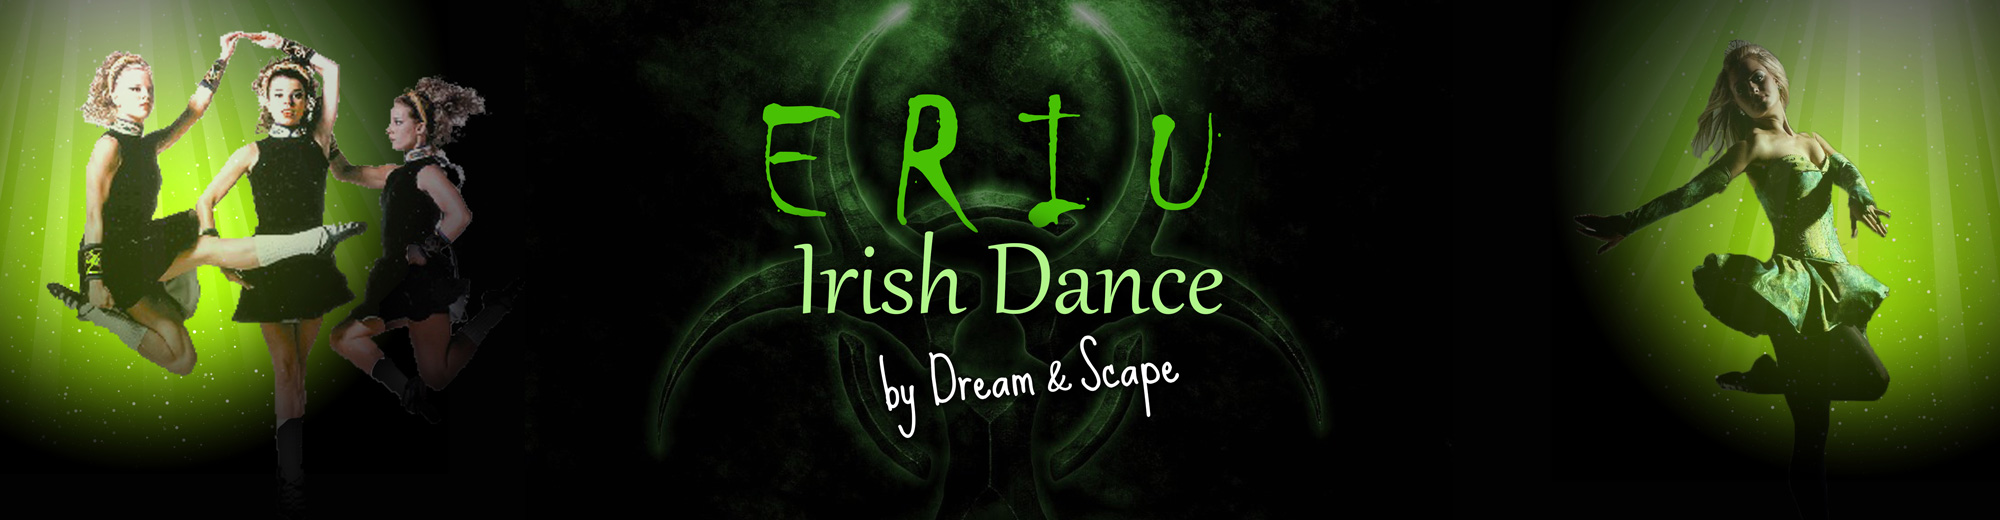 Eriu Spectacle de danse irlandaise